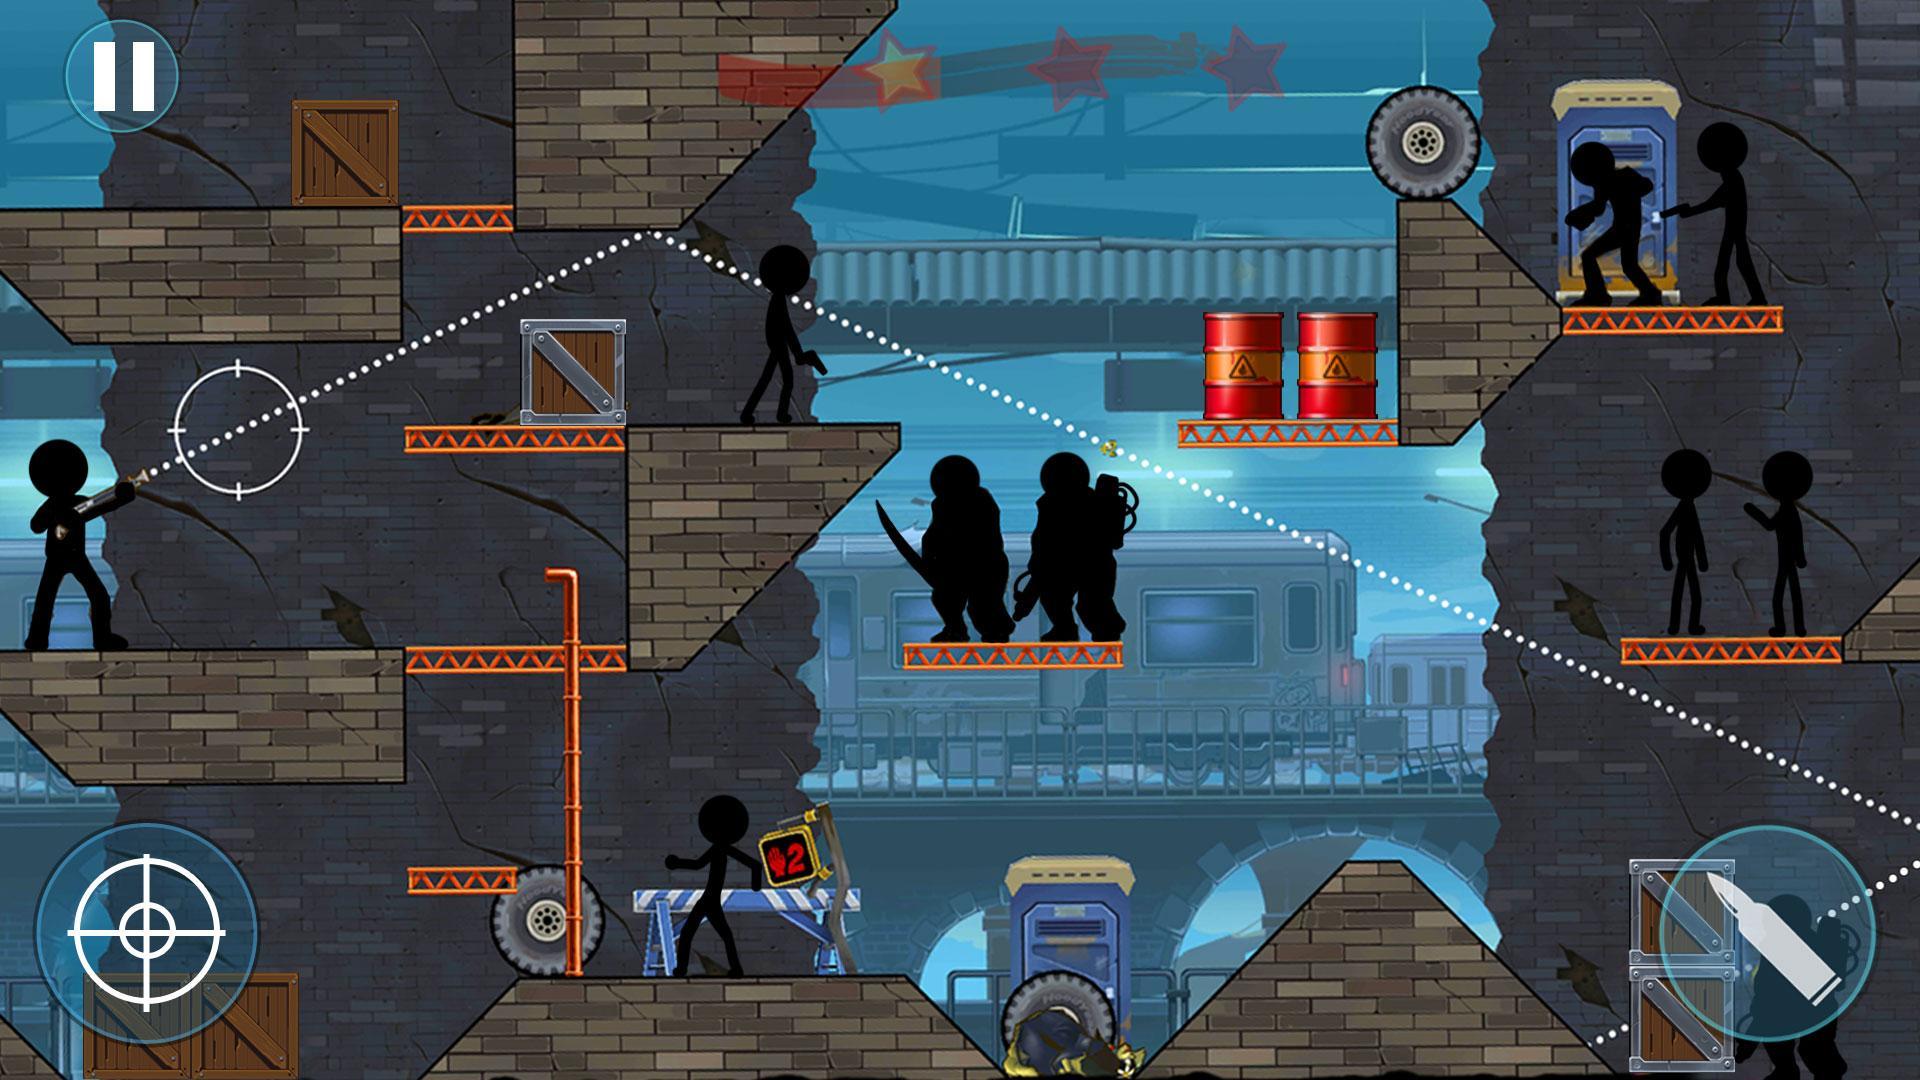 Screenshot 1 of Prisoner Rescue - Counter Assault Stickman Game 1.1.3